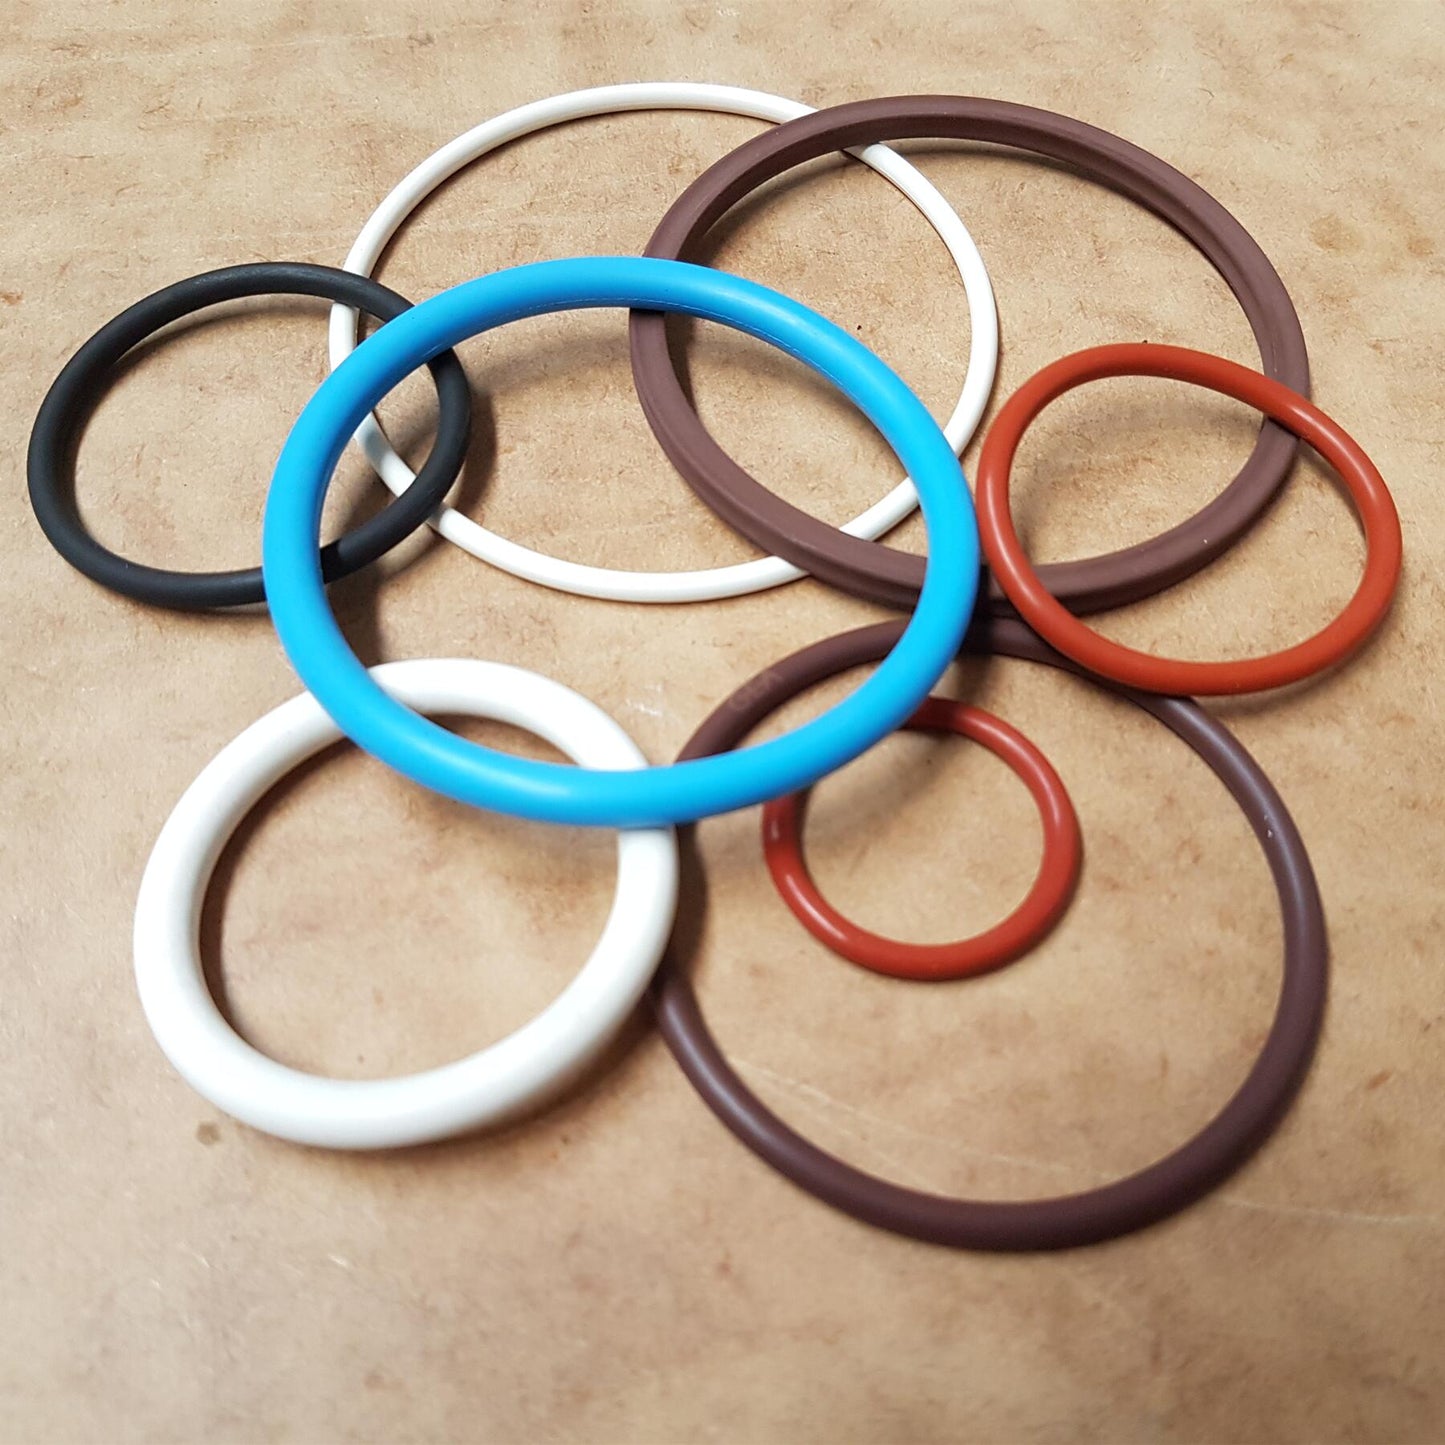 C. FEPM/AFLAS Tetrapropyl Fluoro Rubber Seal Ring Series